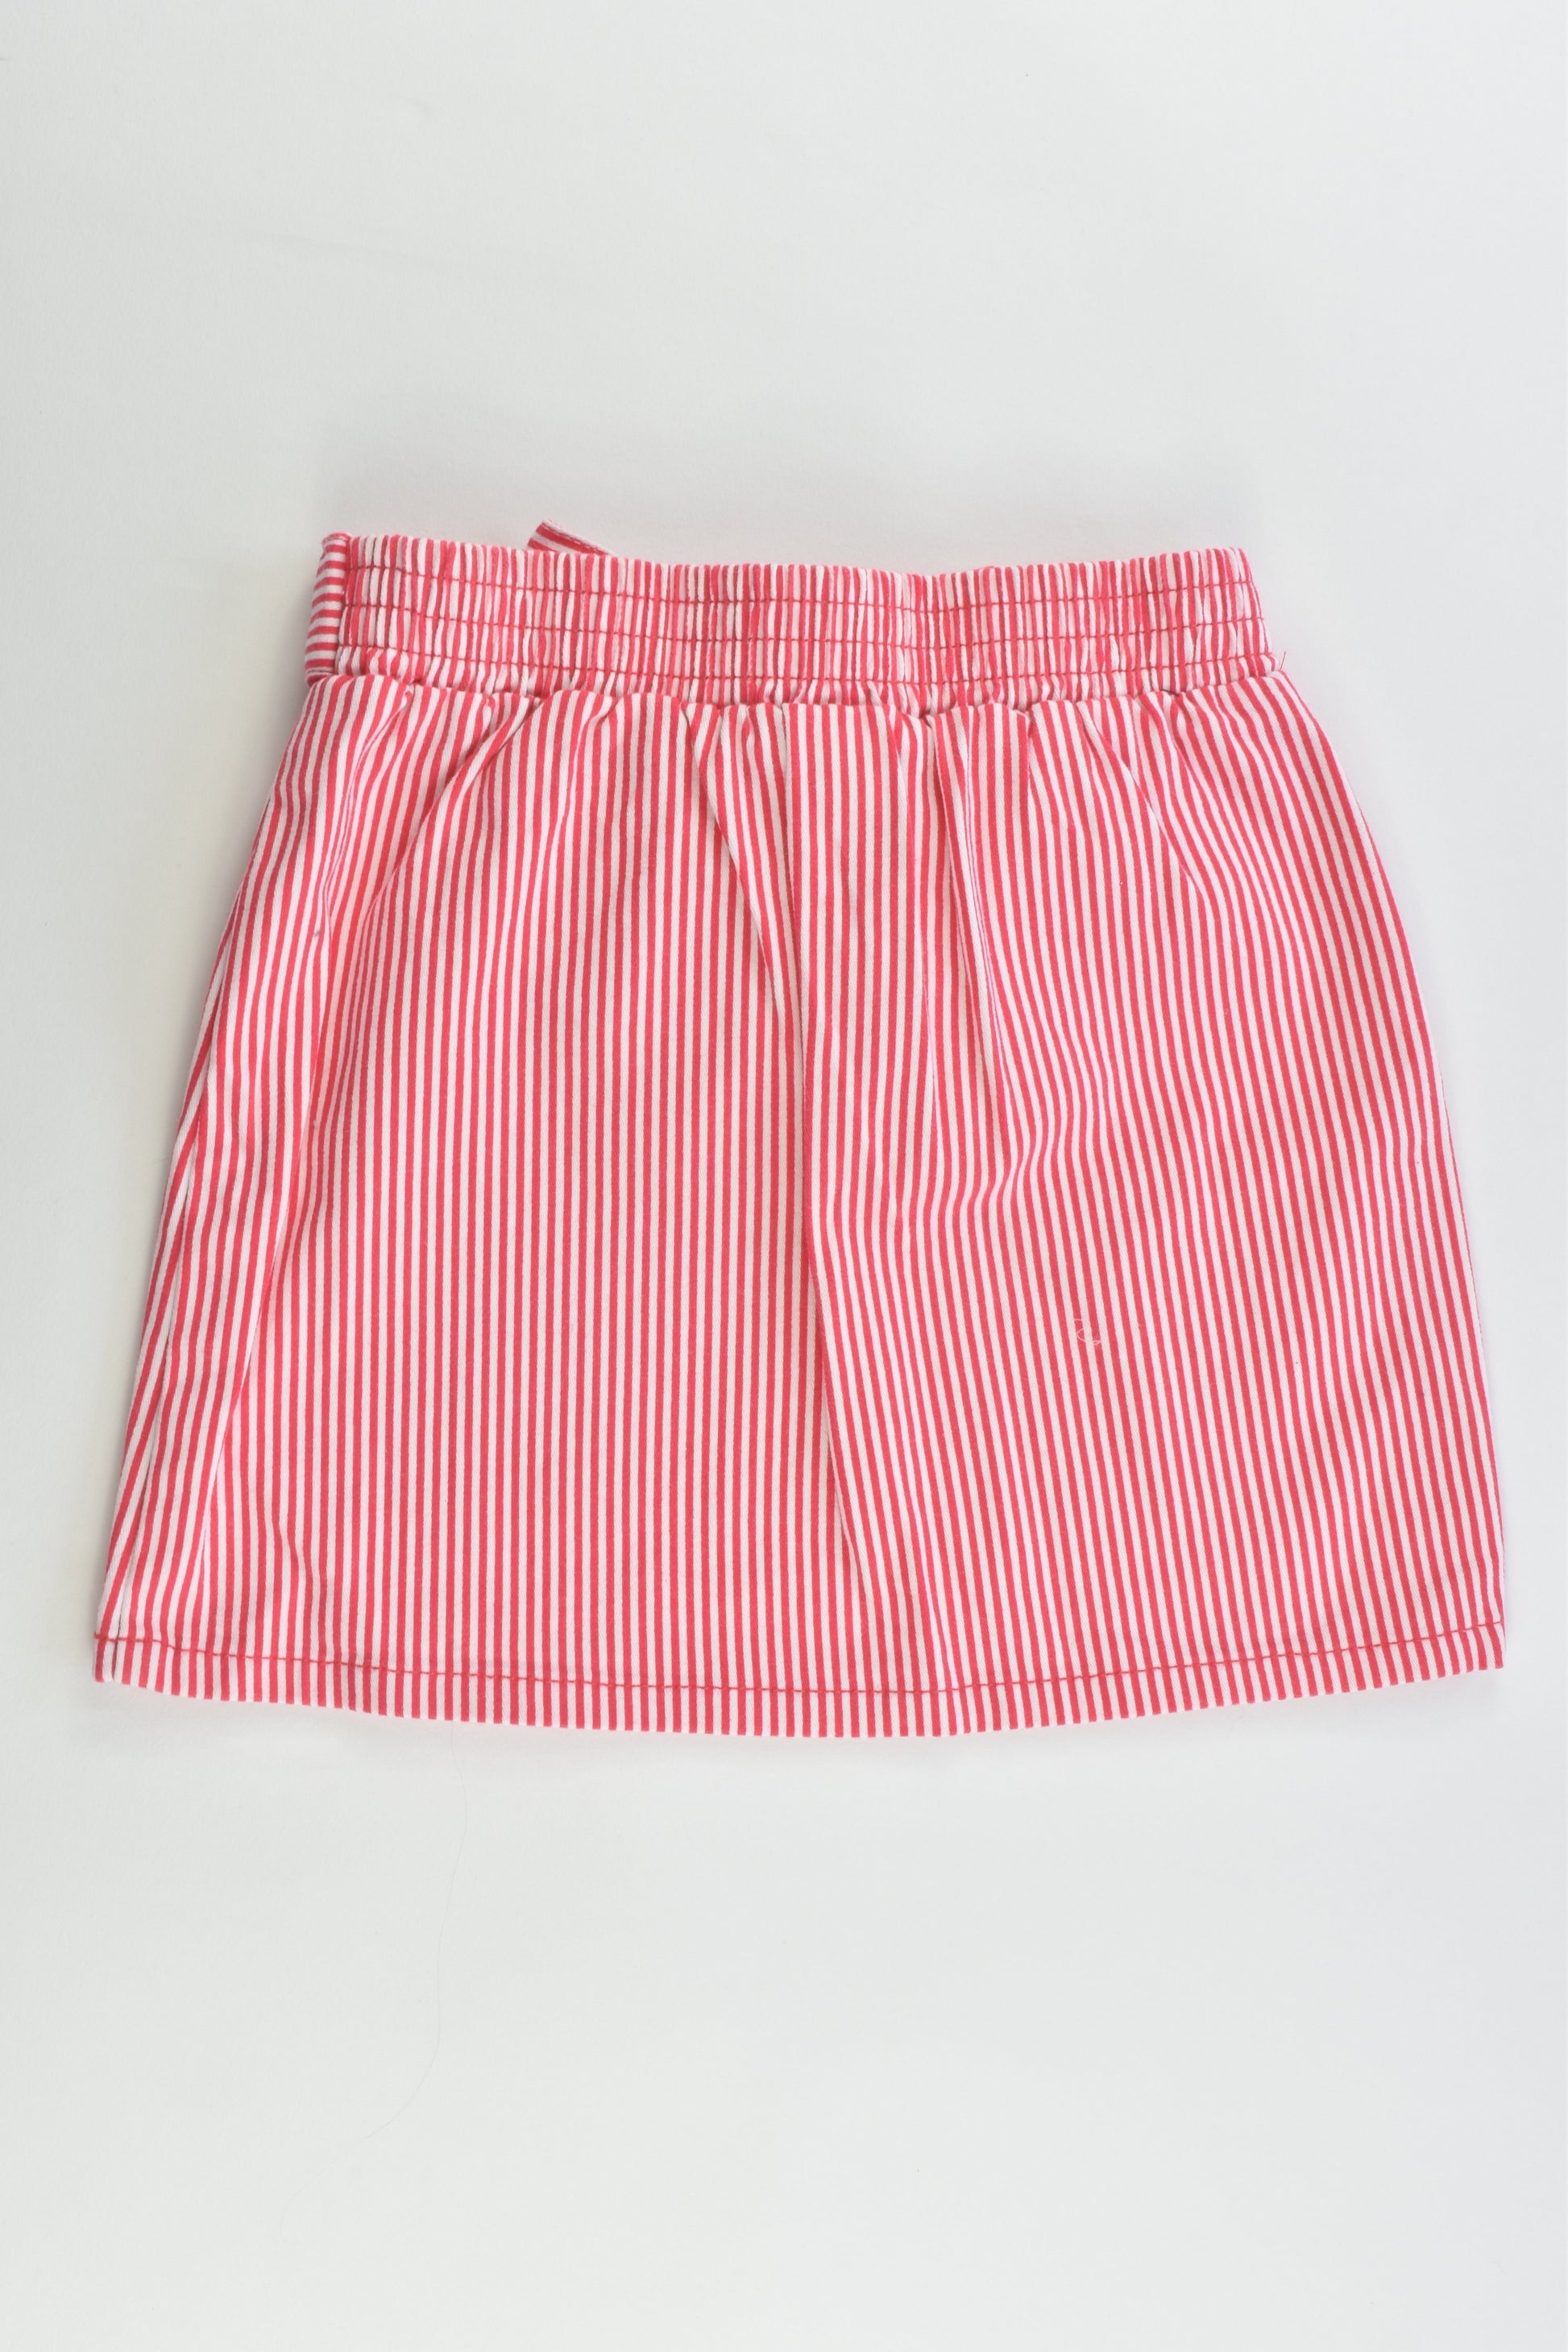 NEW Kids & Co Size 5 Striped Stretchy Skirt